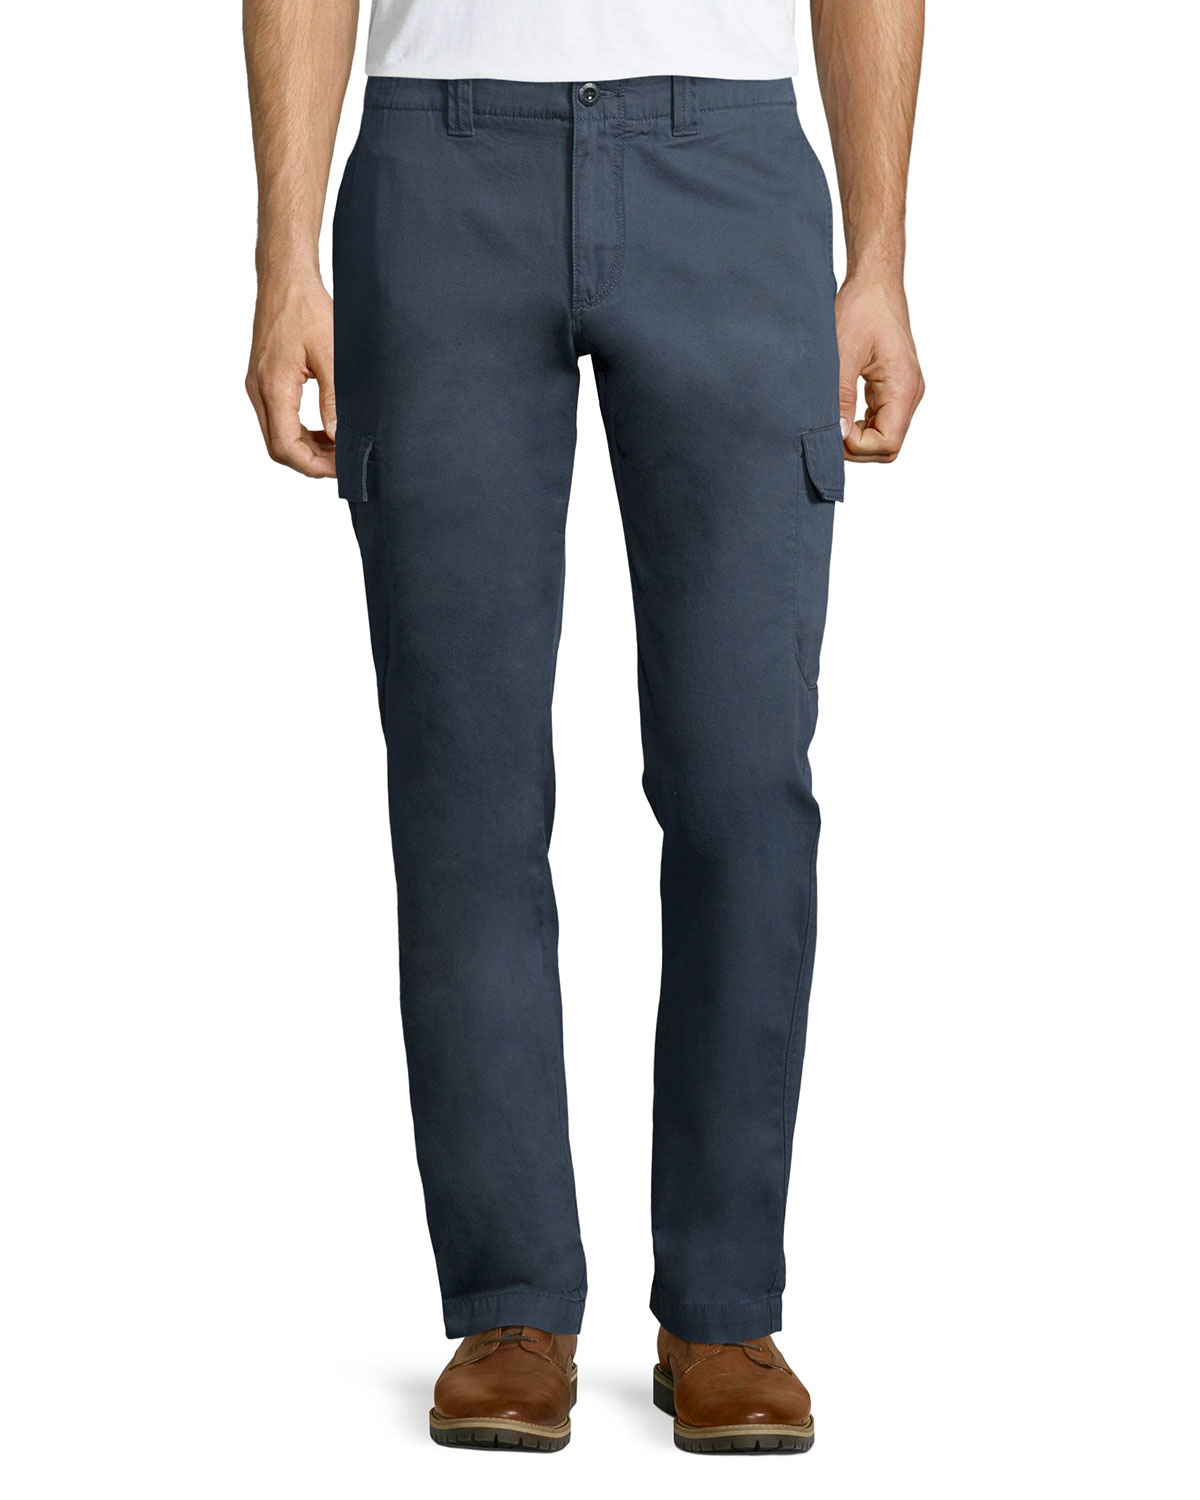 Lacoste Slim-fit Woven Cargo Pants in Gray for Men - Lyst